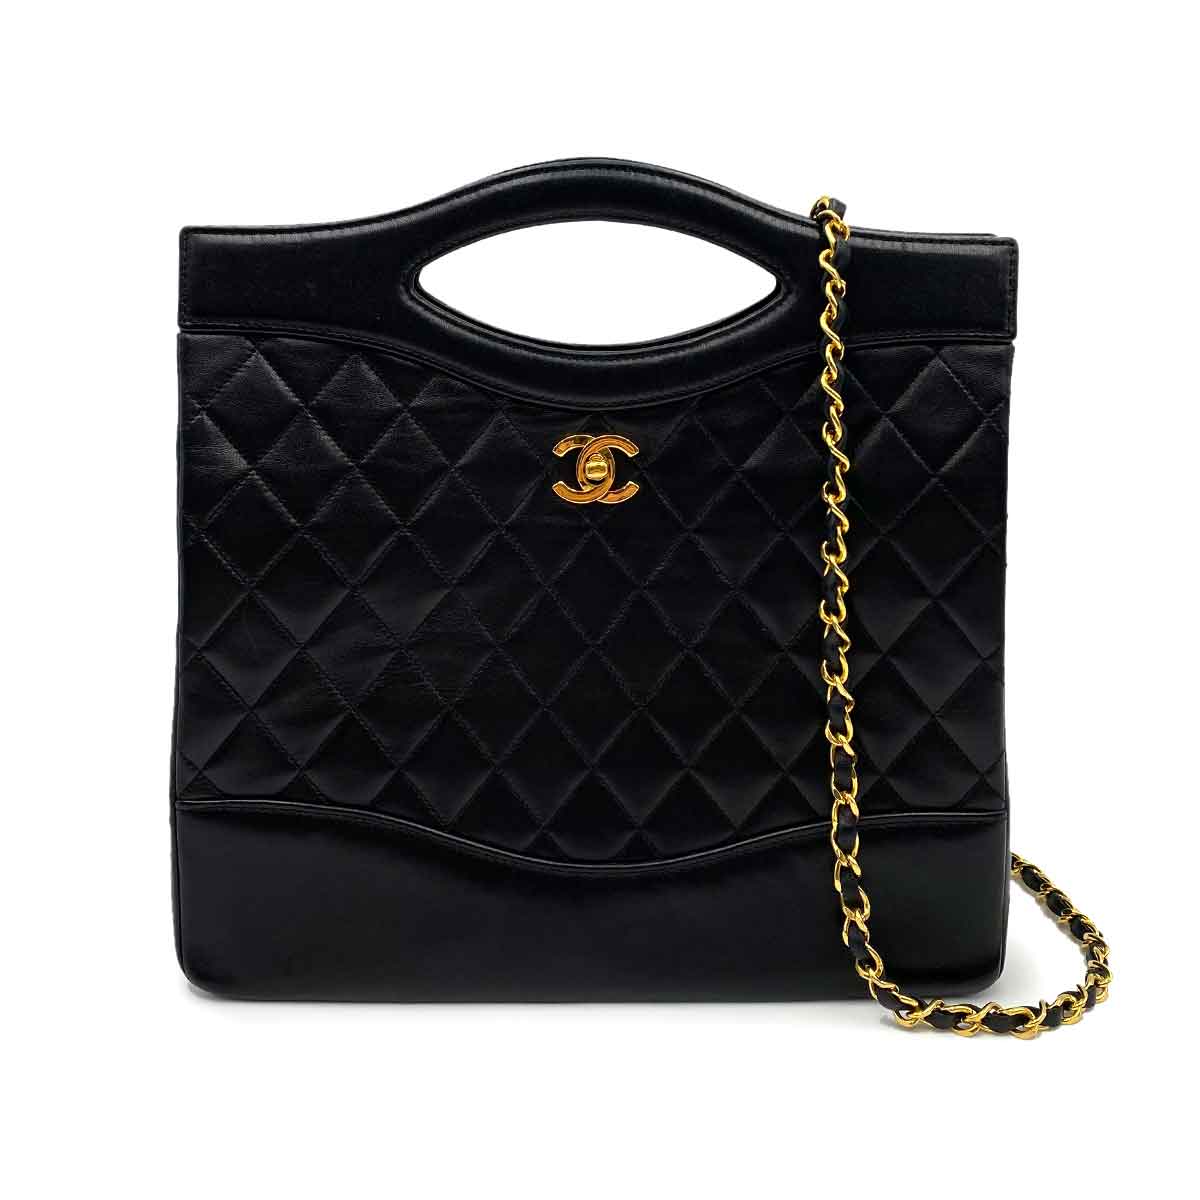 Chanel Chanel Vintage Top Handle Tote Black Lambskin GHW #1 90228032